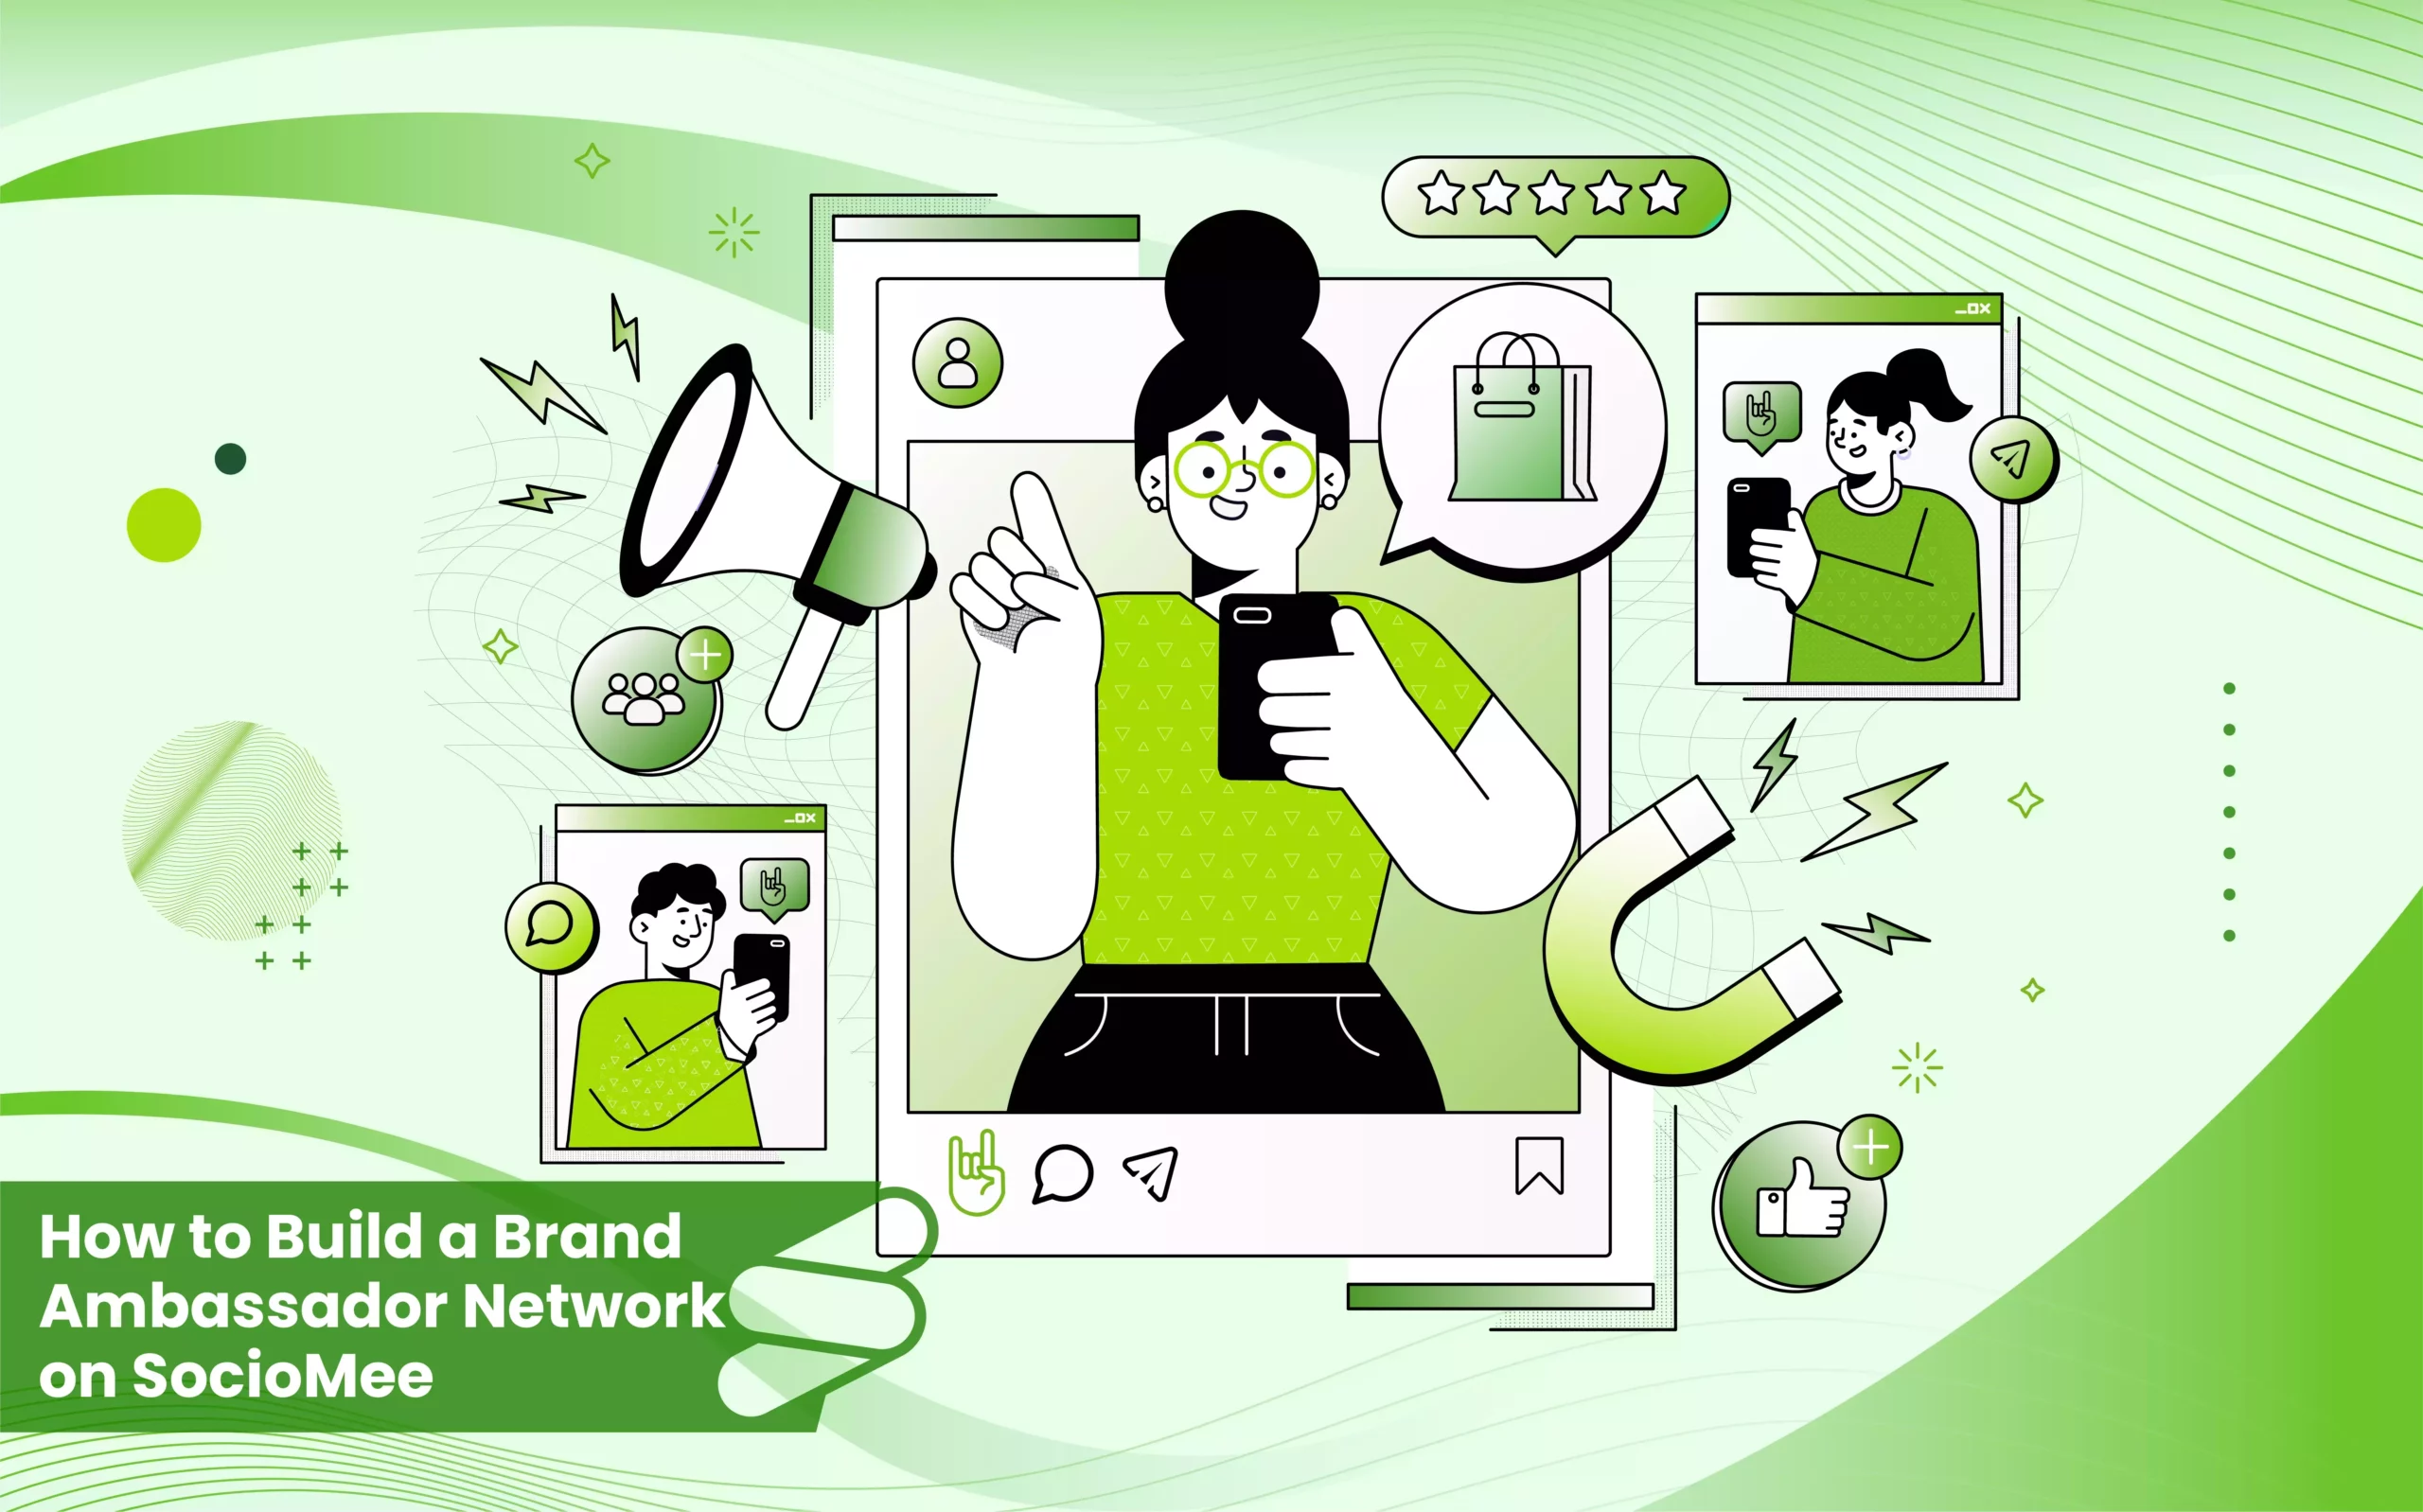 Build a Brand Ambassador Network on SocioMee